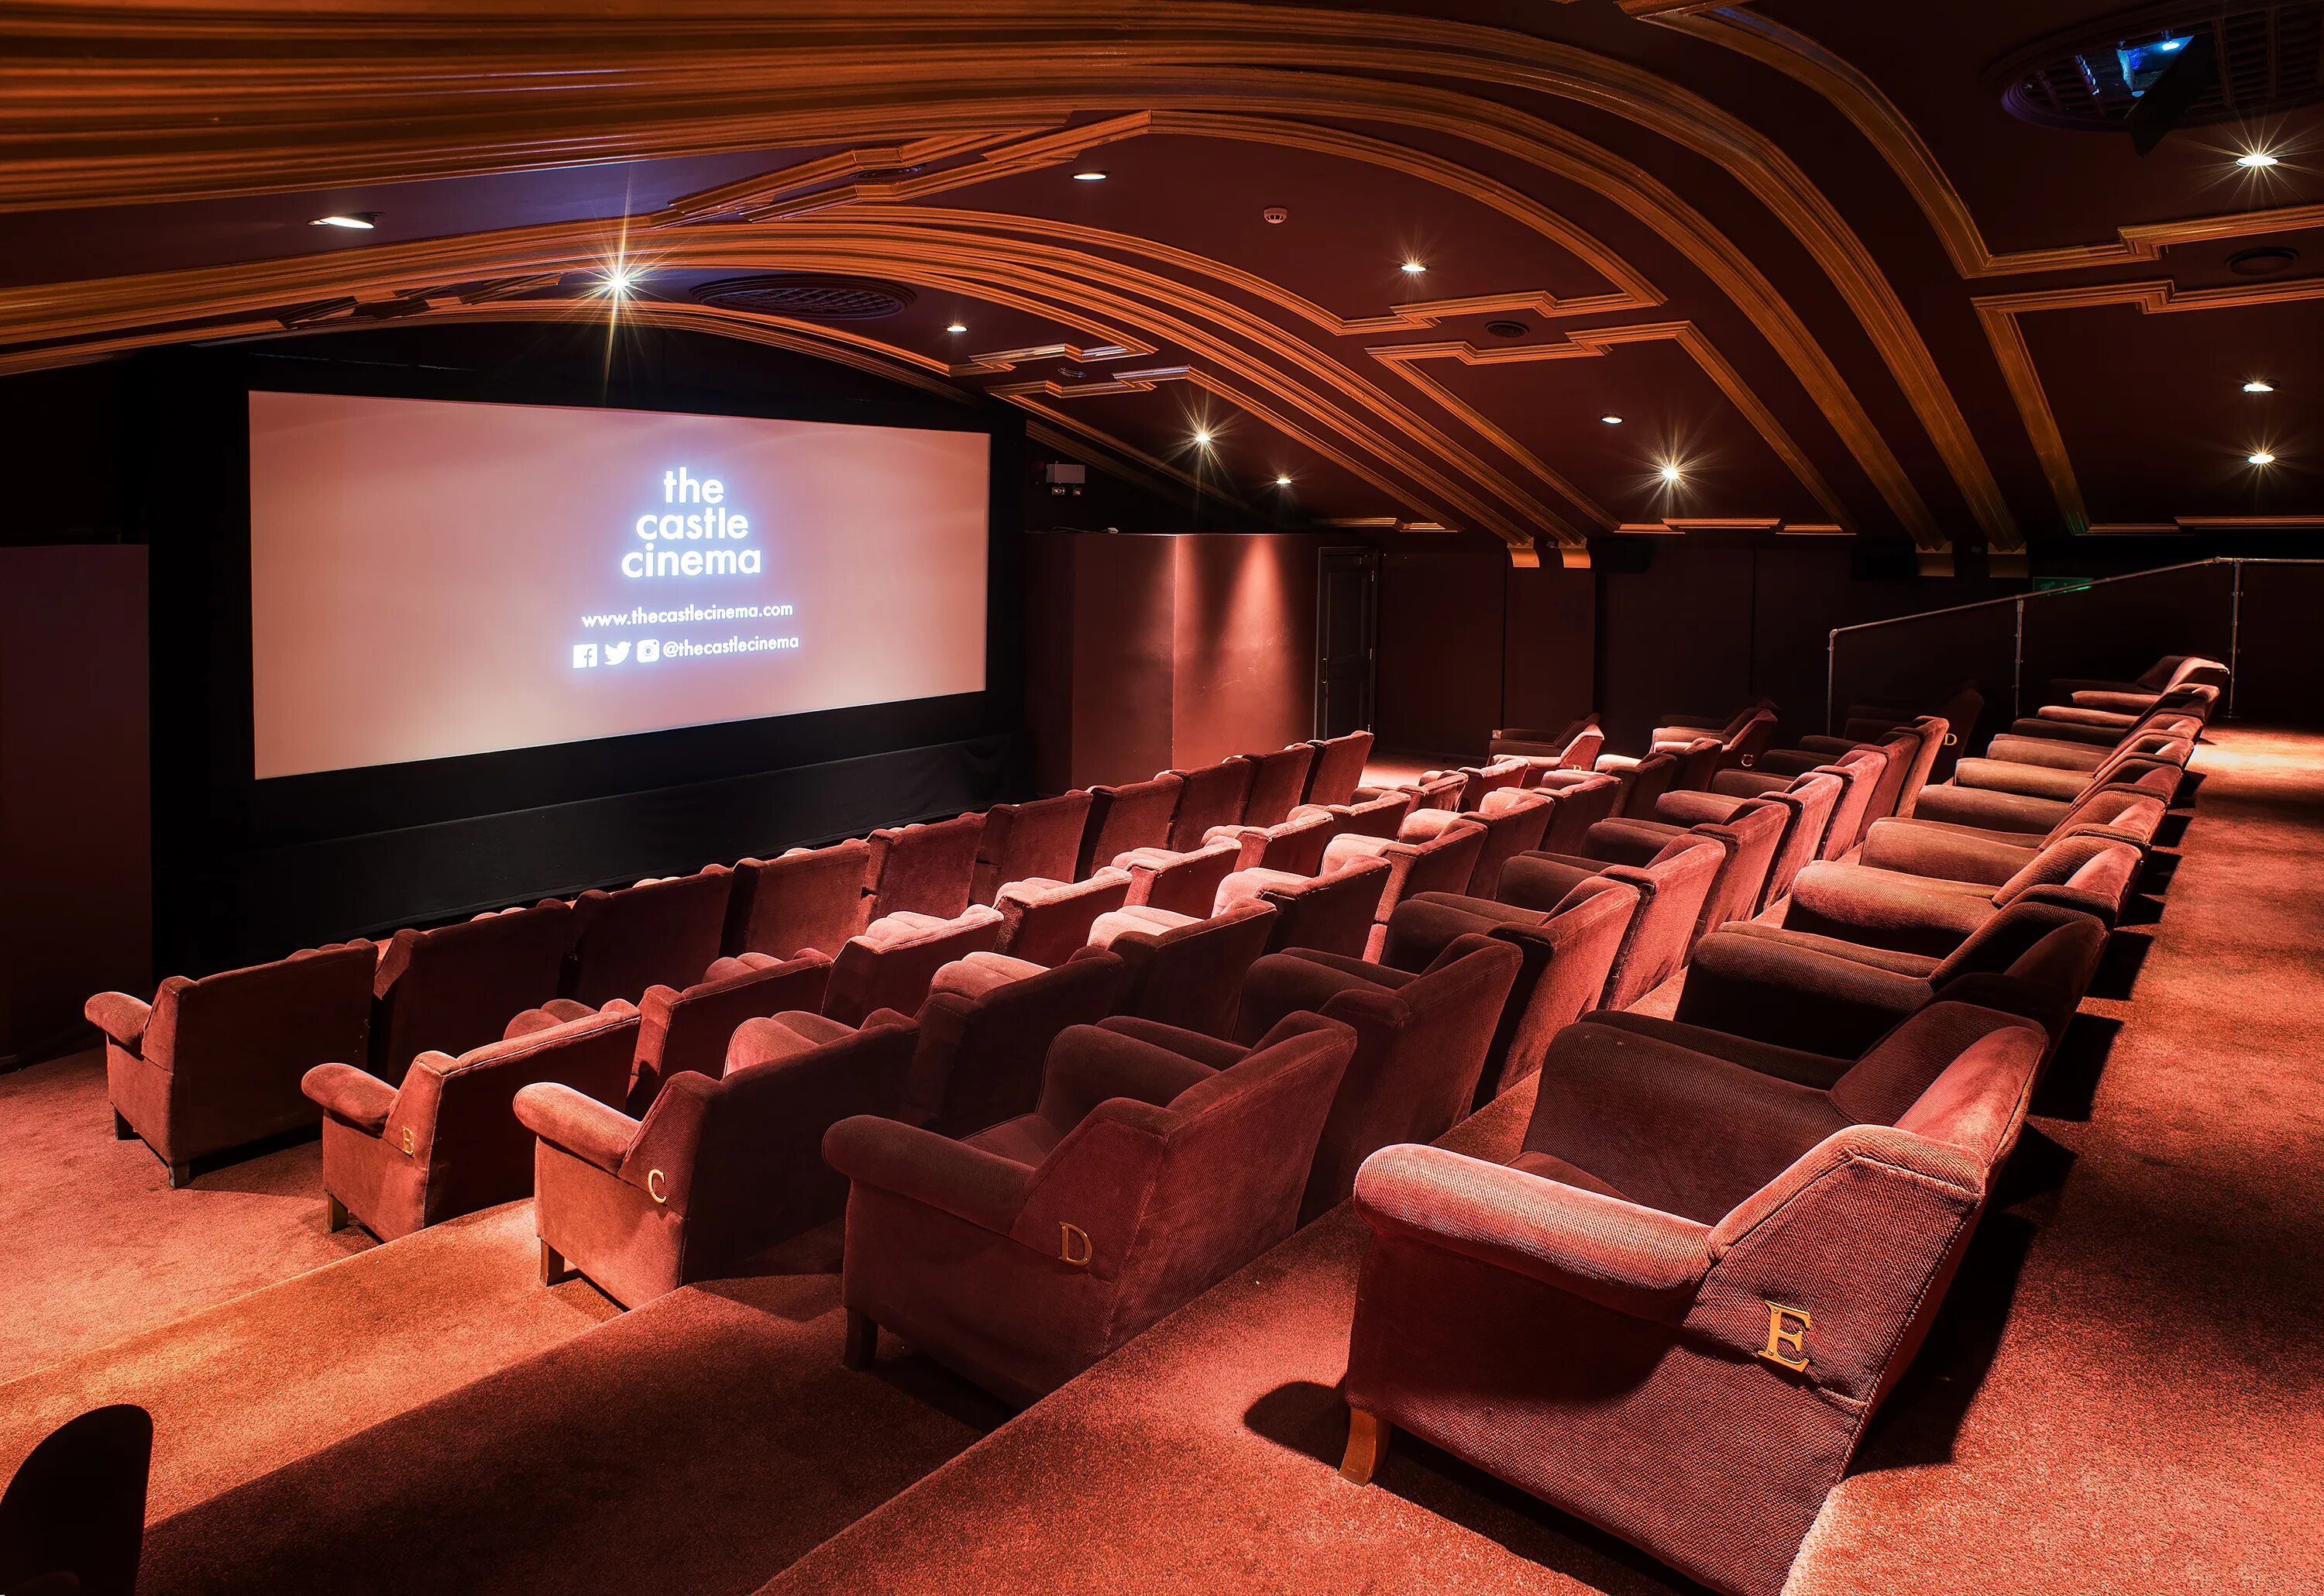 Next Cinema. Clarie Castle Cinema. Germany Blogger Cinema. T4 the cinema blog